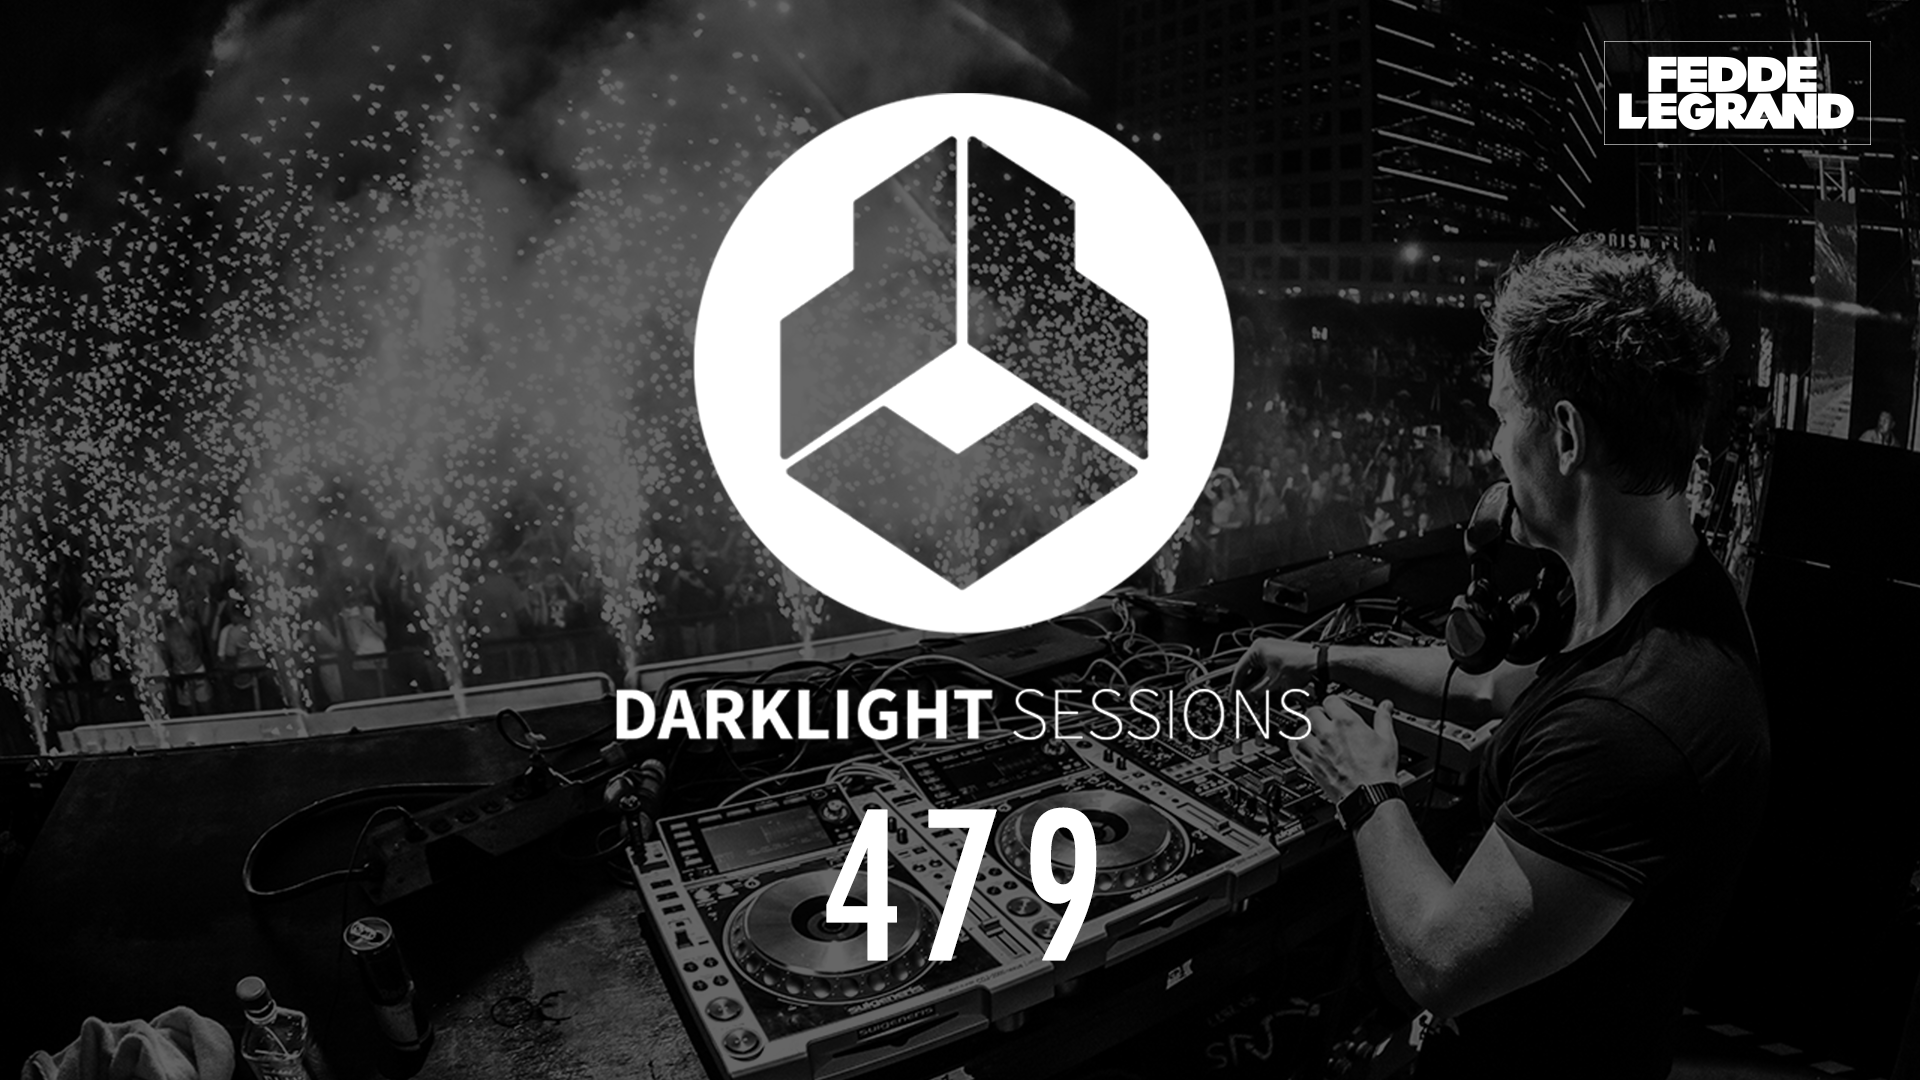 Darklight Sessions 479